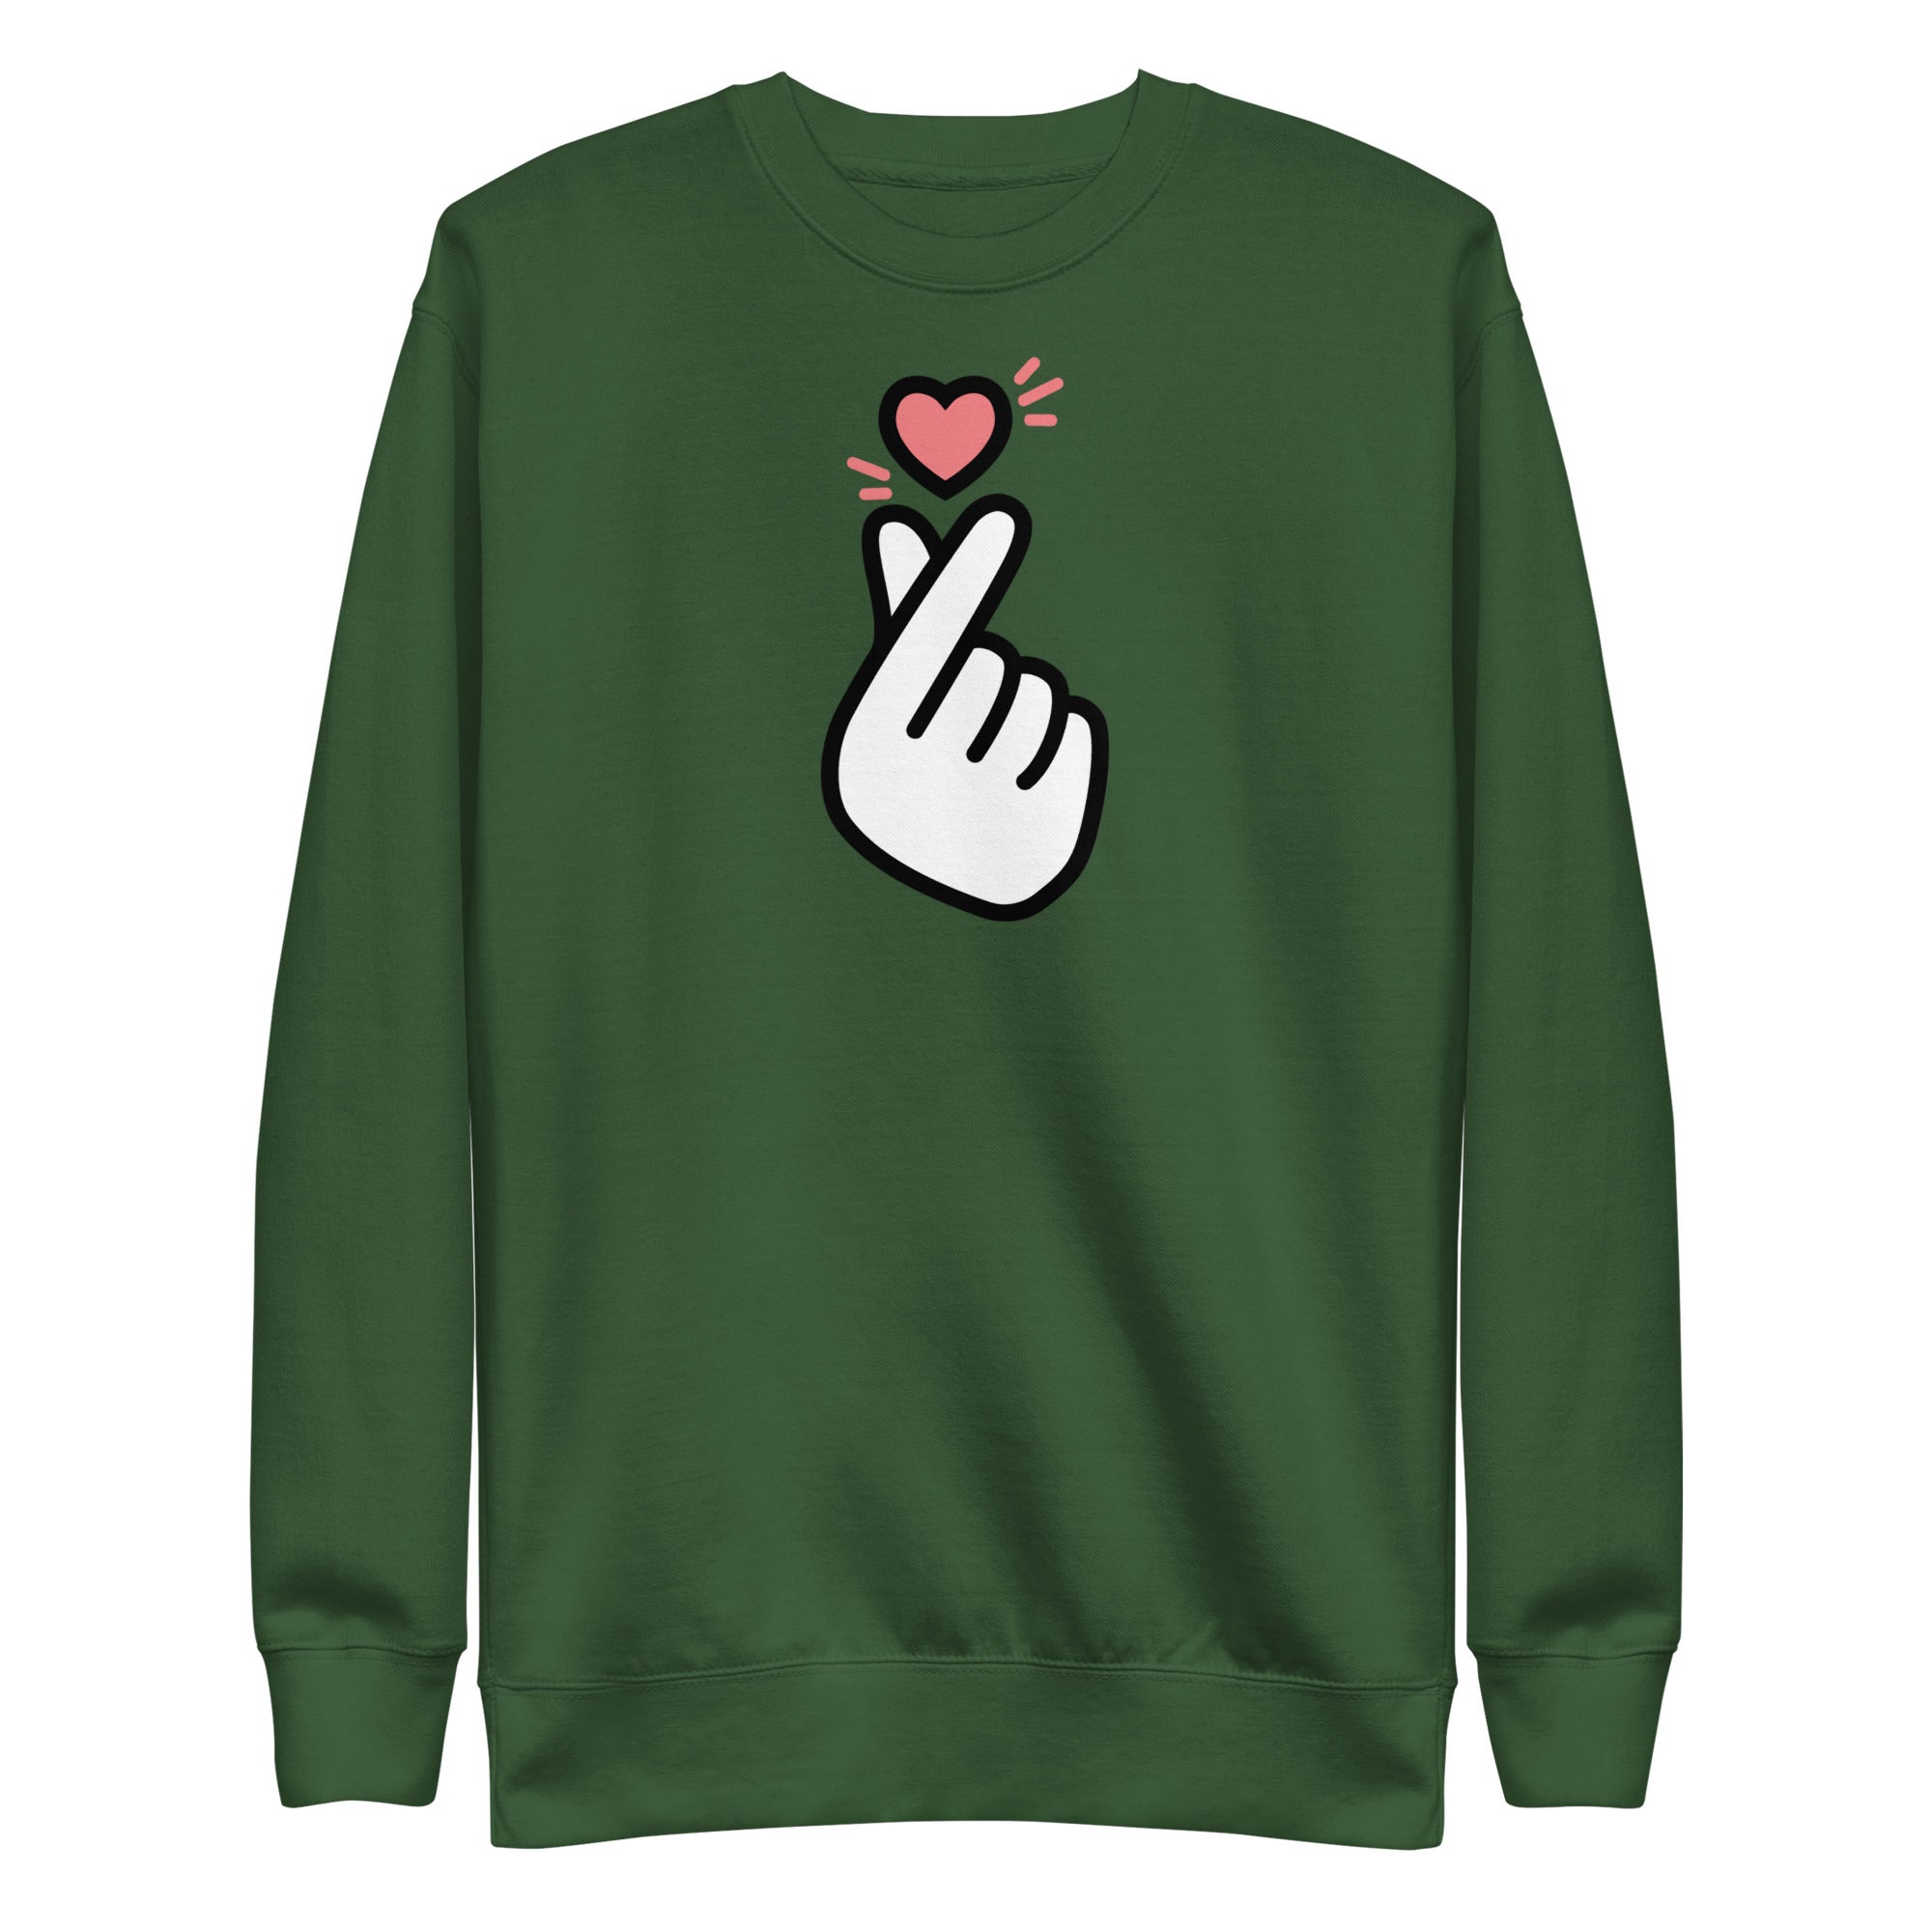 I Heart You Unisex Premium Sweatshirt